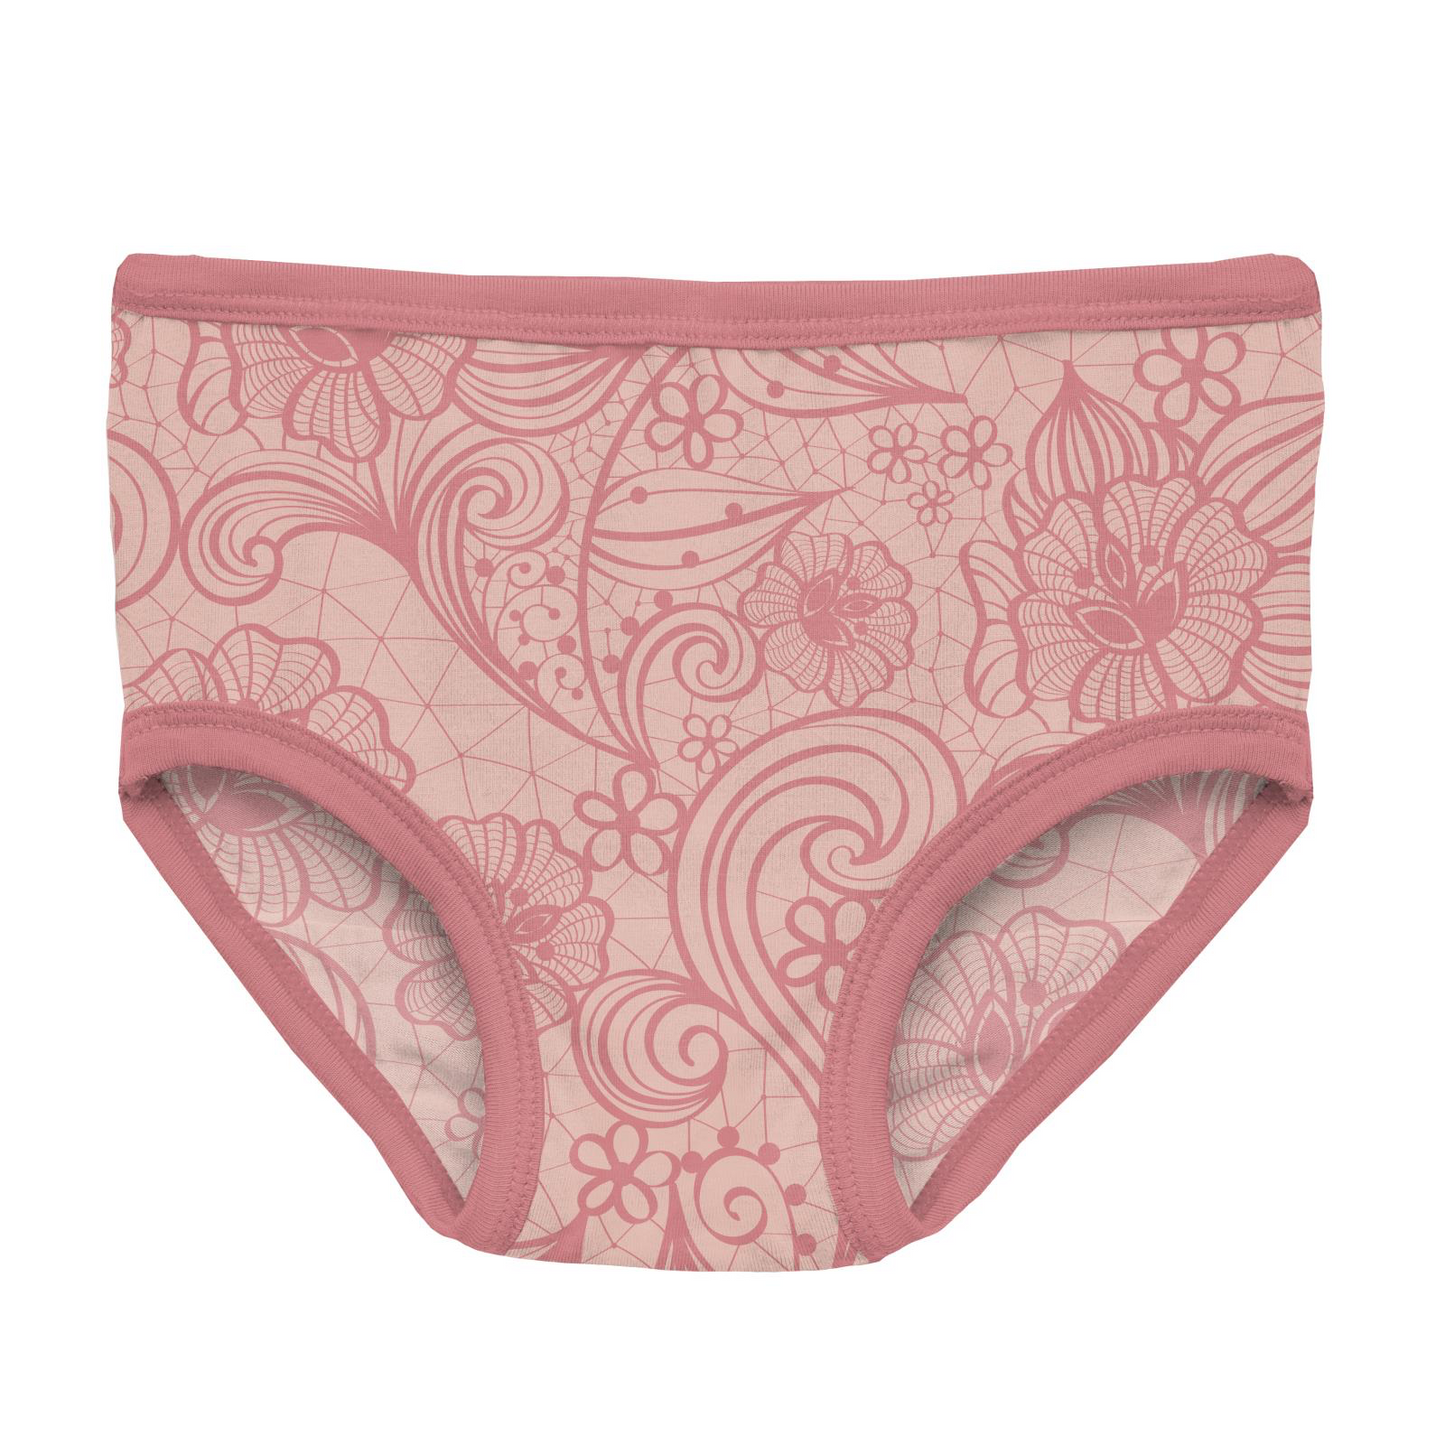 Peach Blossom Lace Print Girl's Underwear